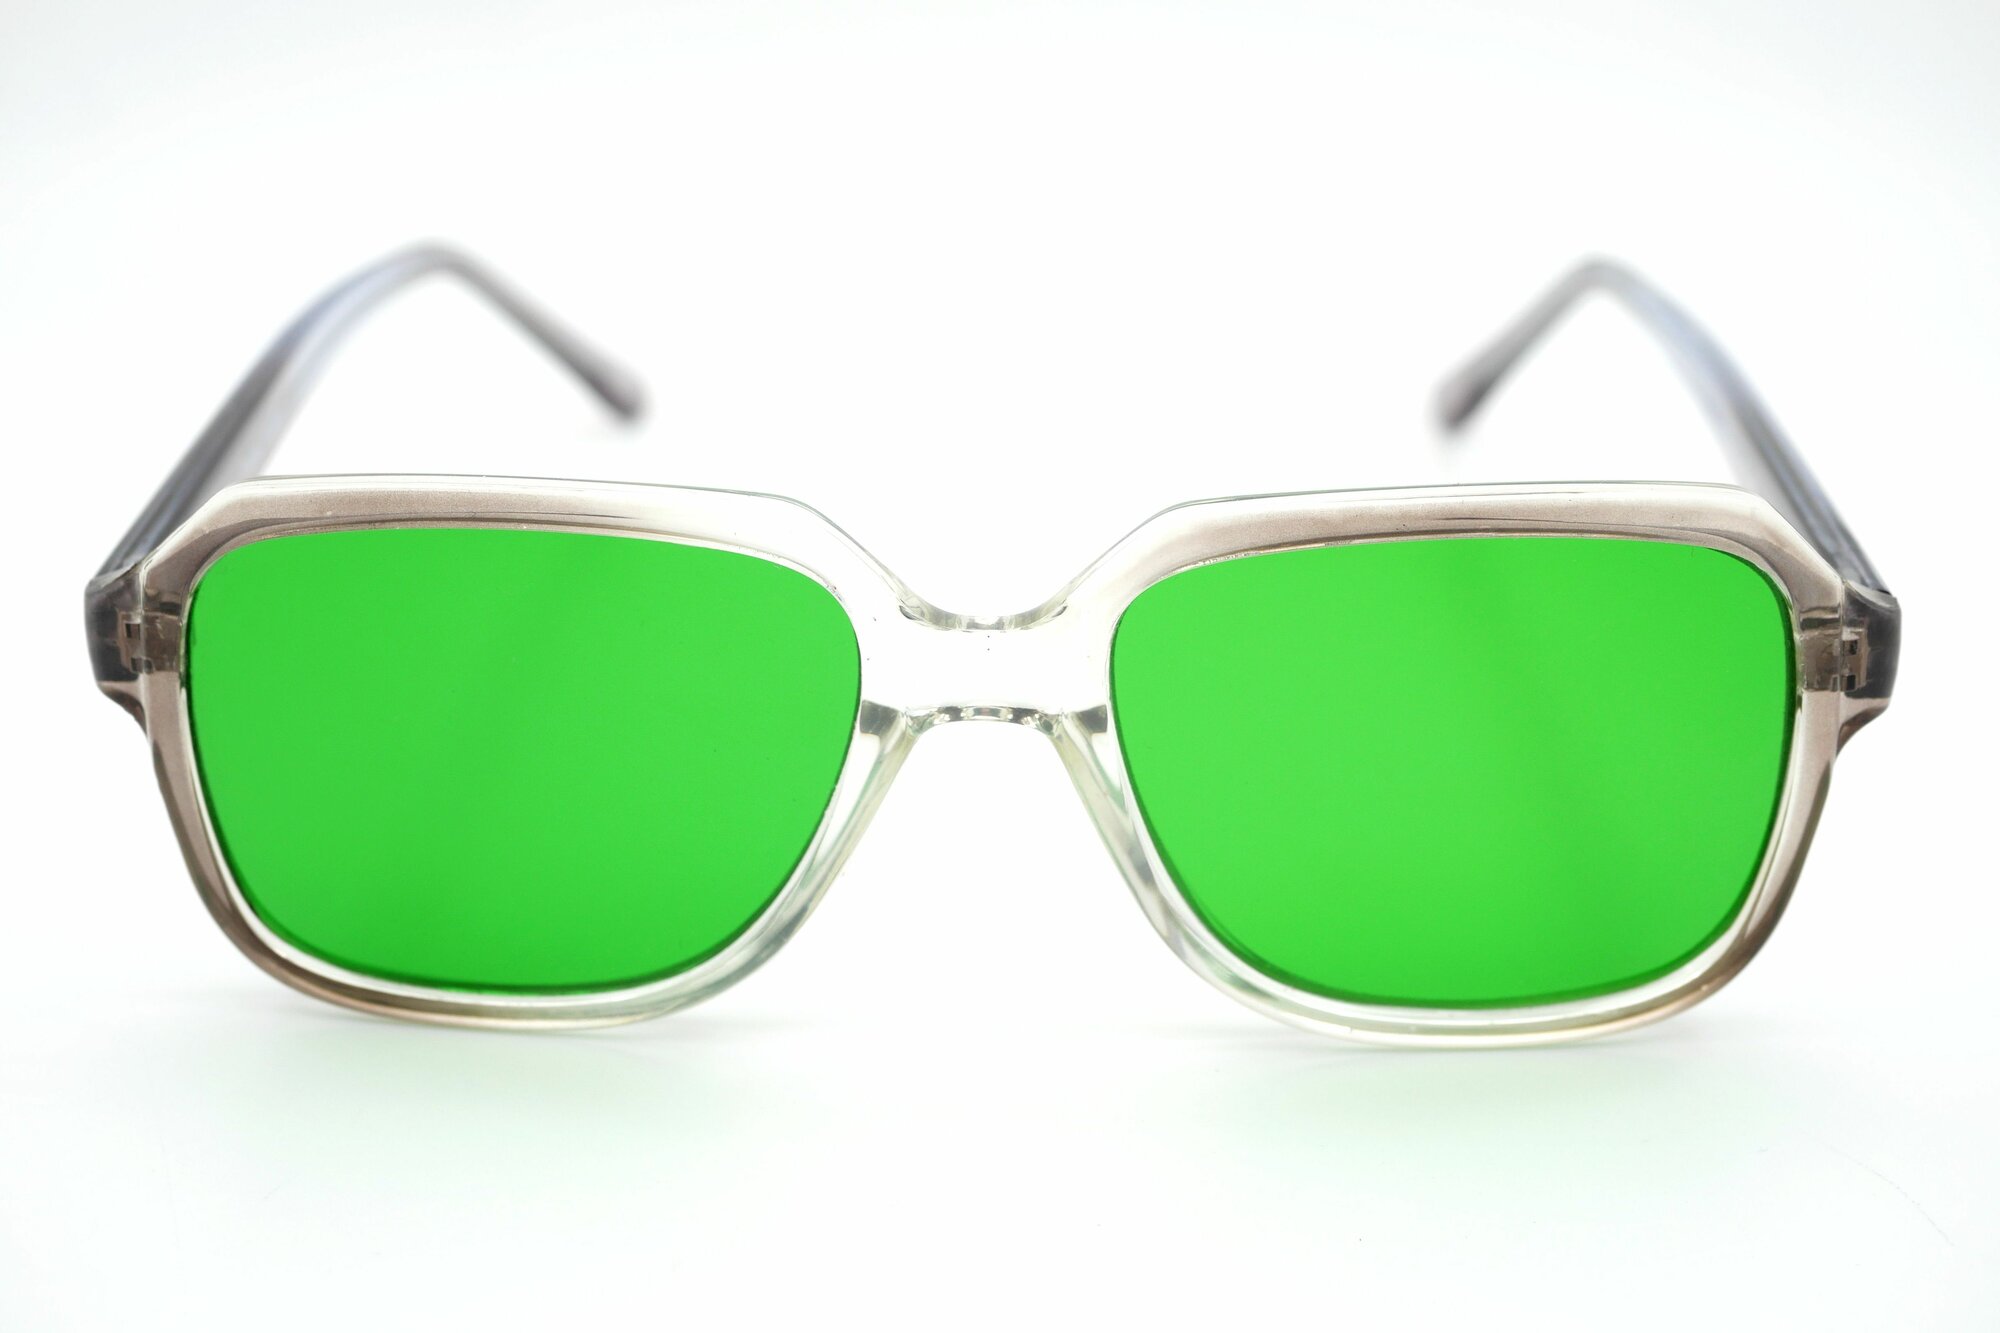 Очки глаукомные (при глаукоме, зеленые, линза пластик). лечение глаукомы/лечебные очки/глаукома/защитные очки